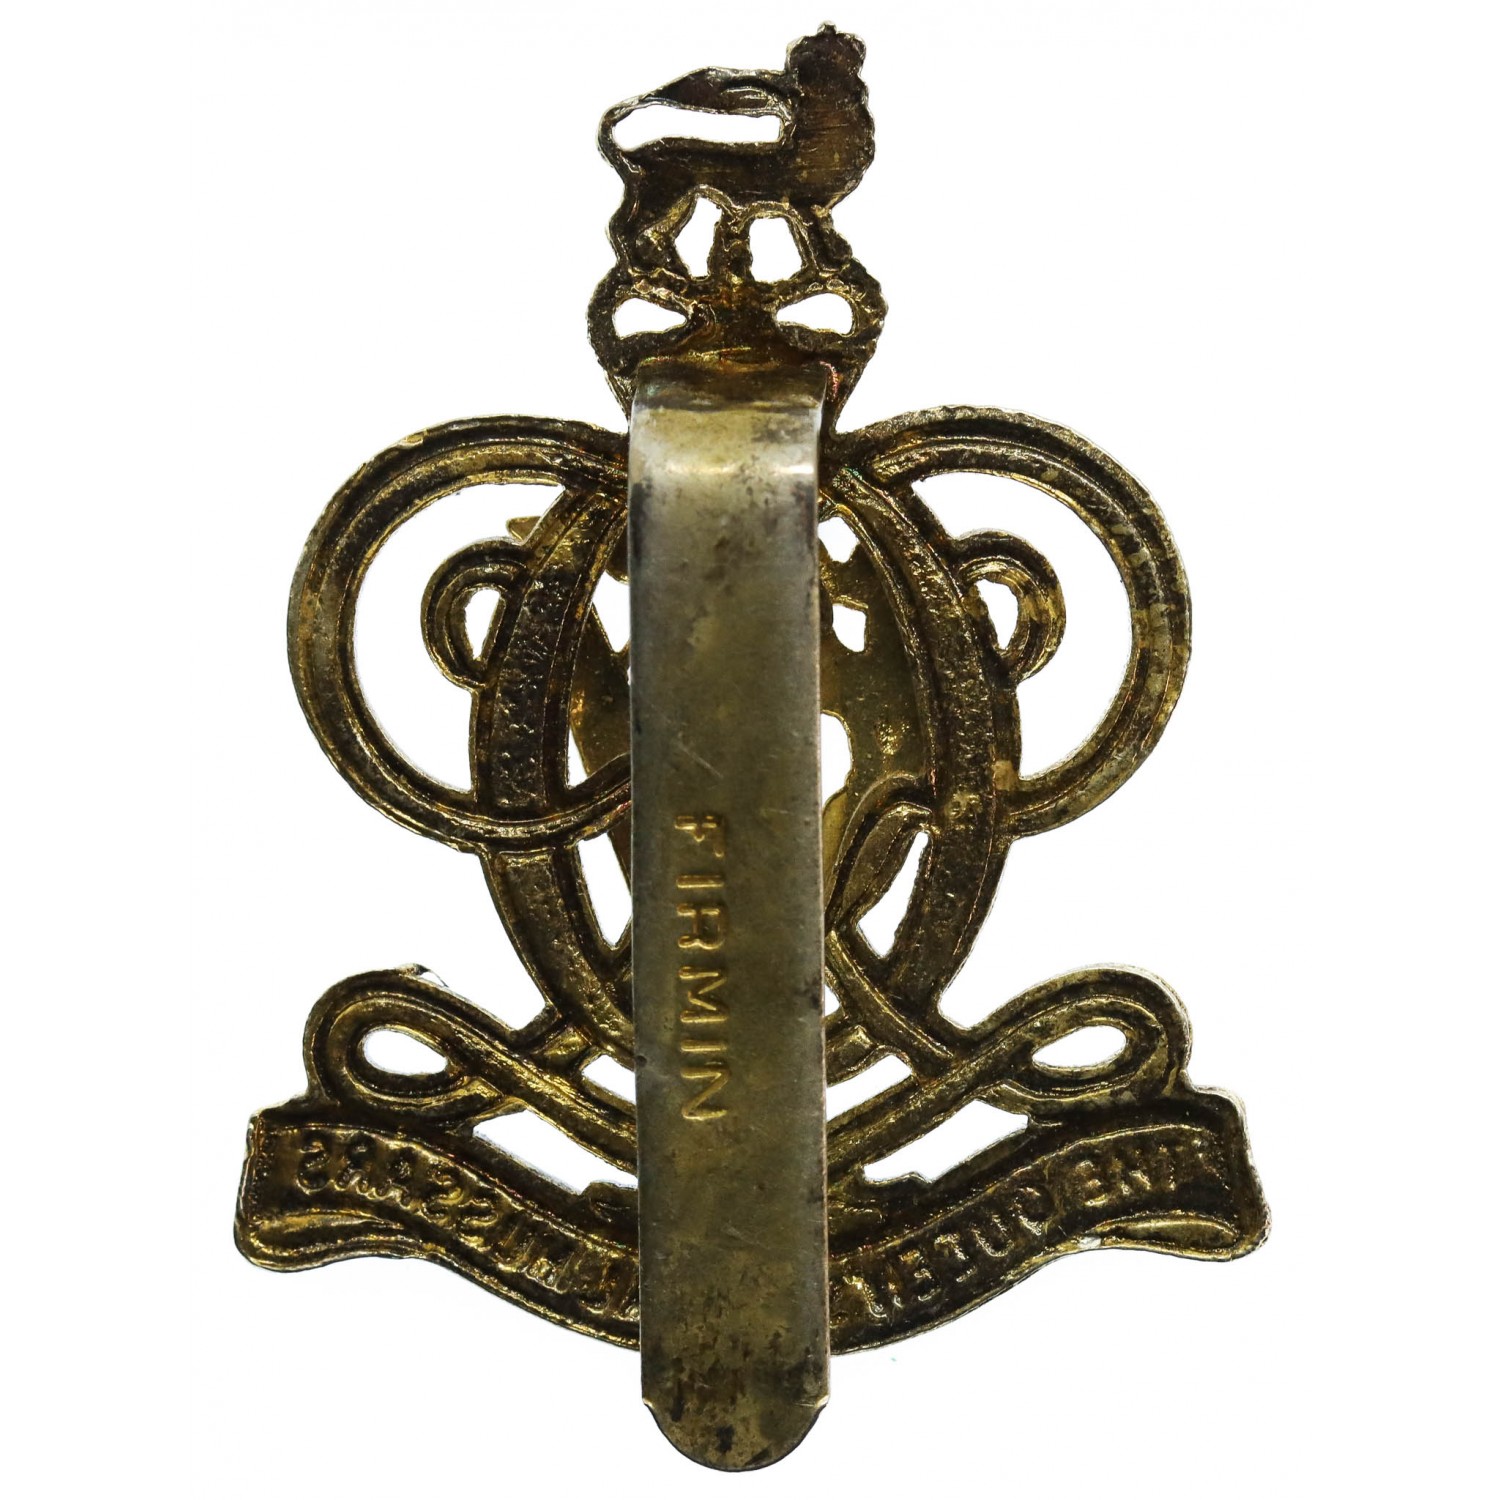 The Queen's Royal Hussars Cap Badge